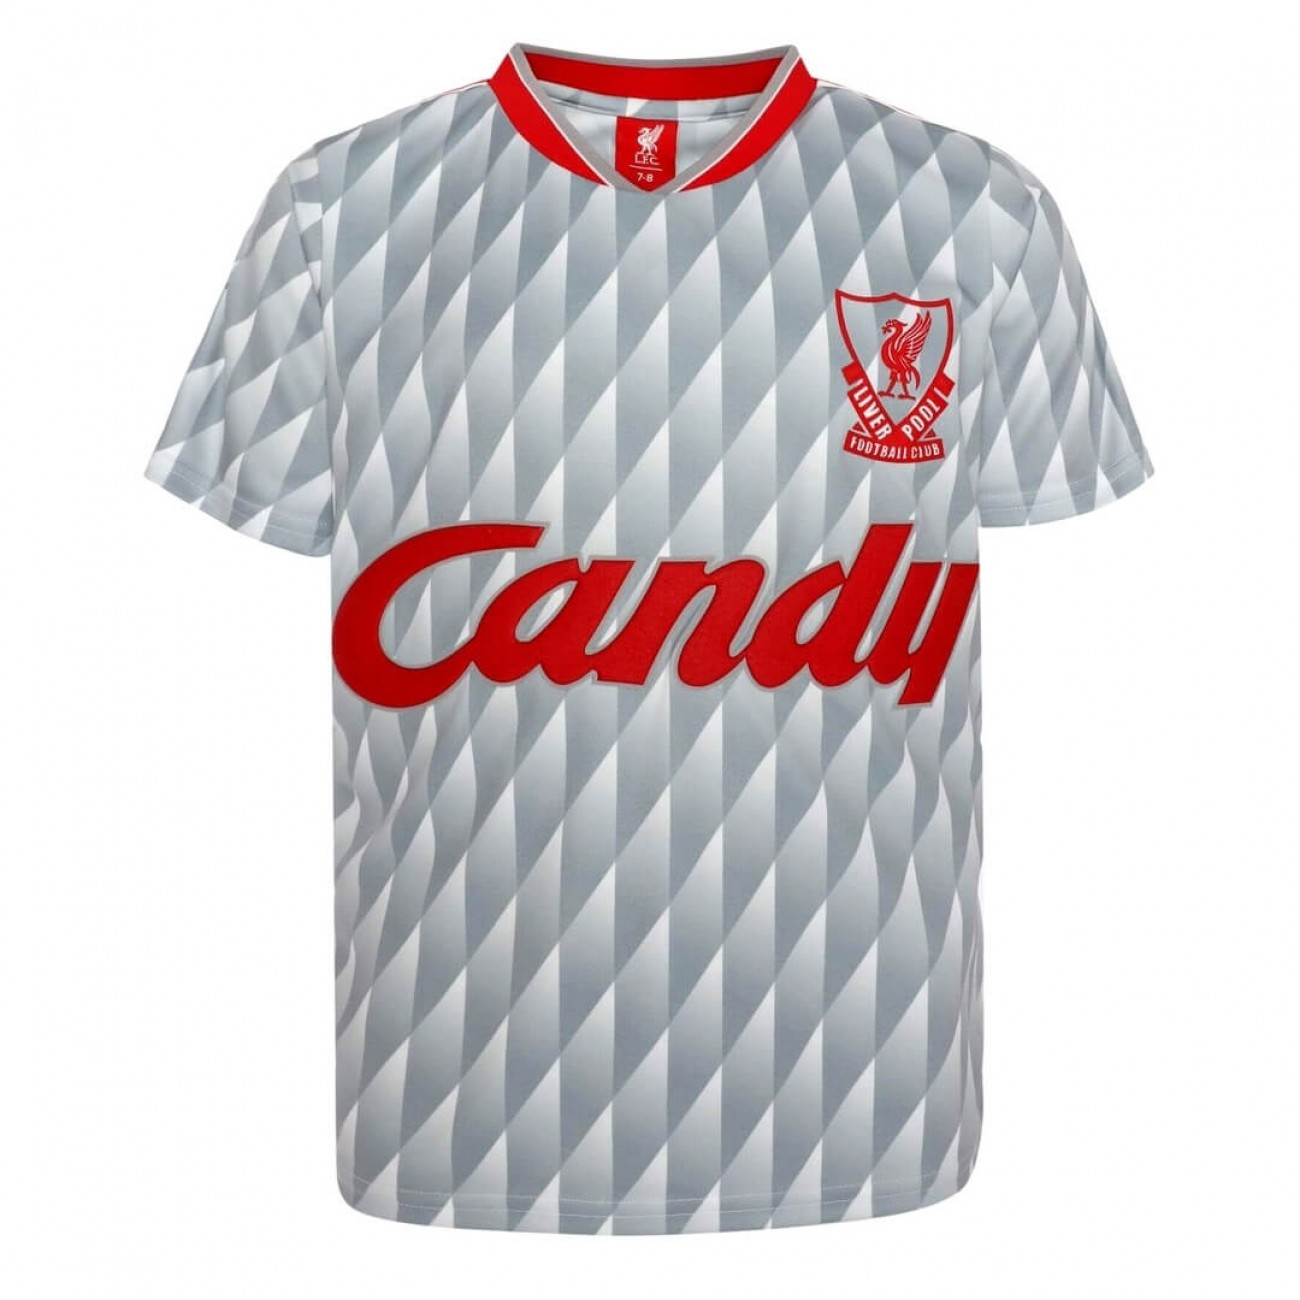 Camiseta Liverpool 1989 90 niño